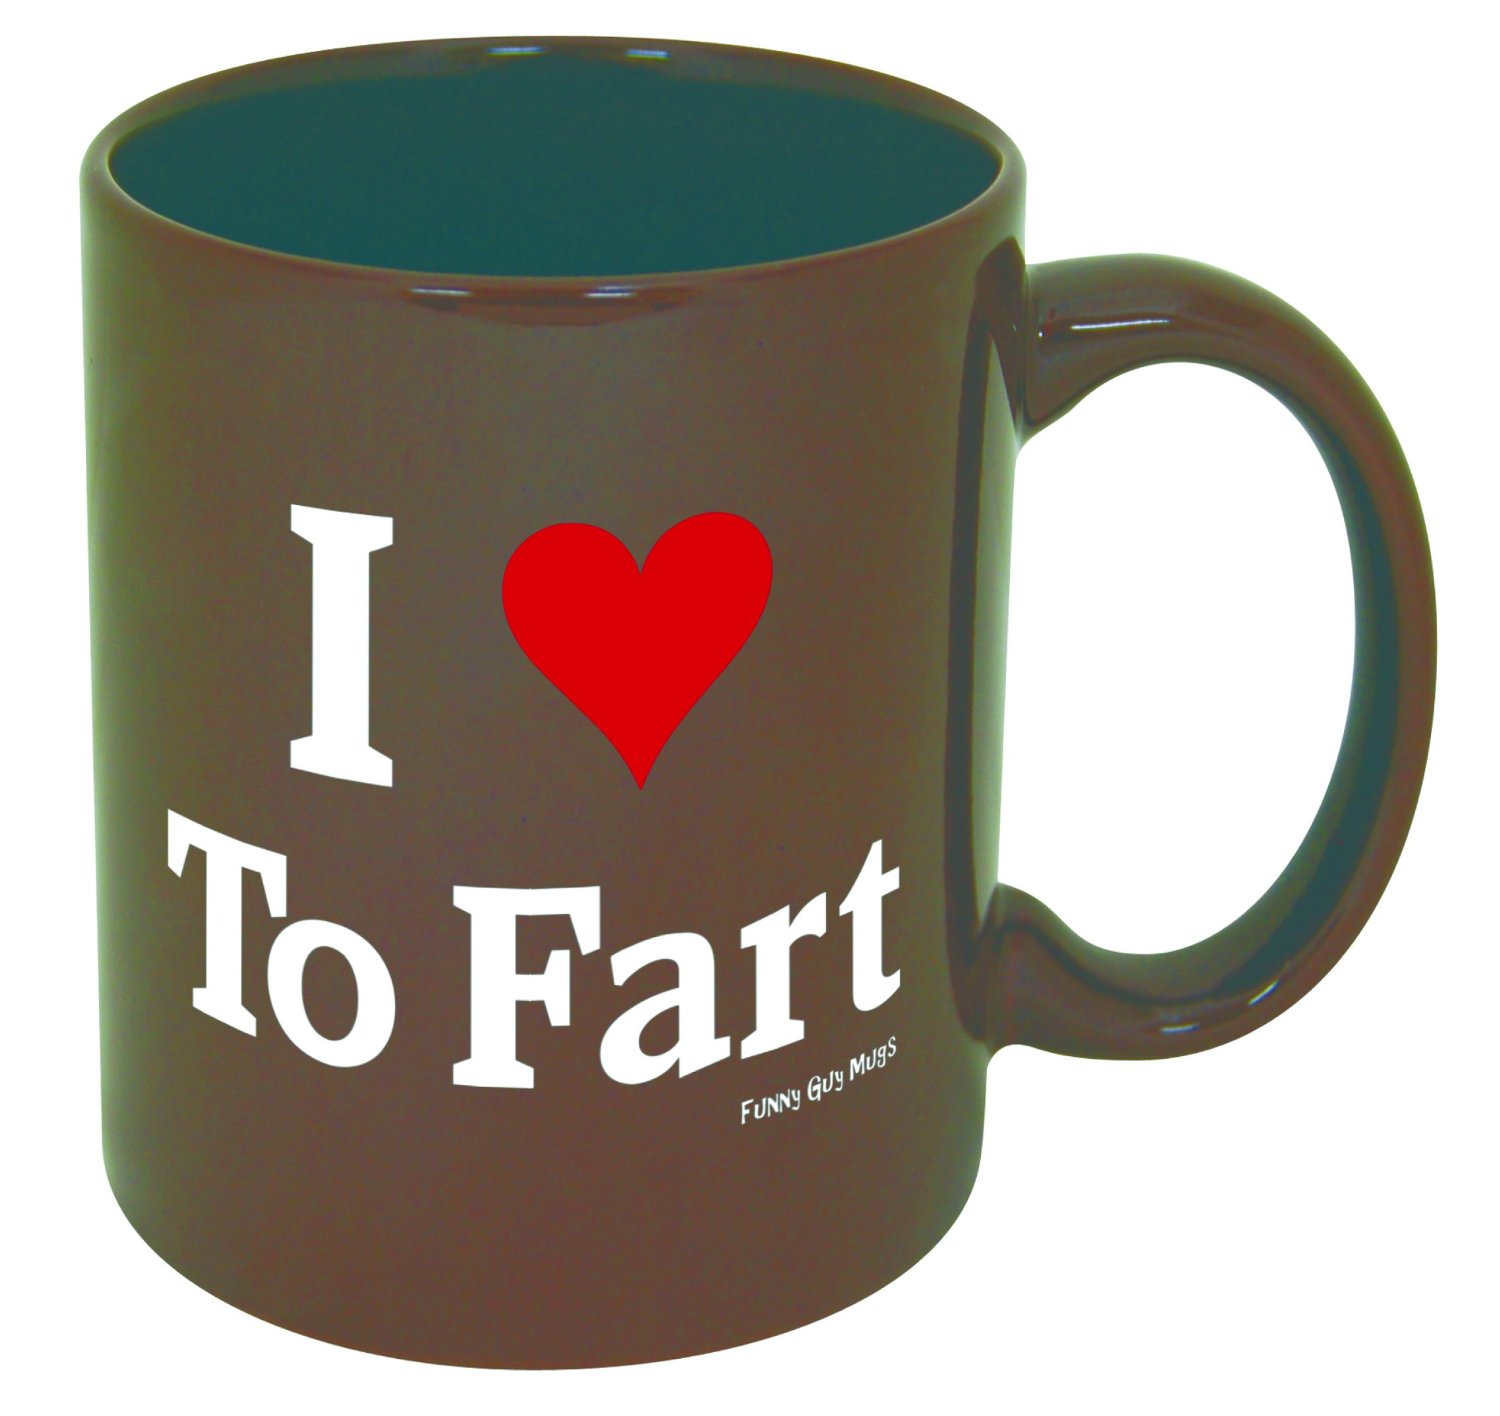 funny coffee mugs and mugs with quotes: Novelty fun coffee mug gift : I LOVE TO FART